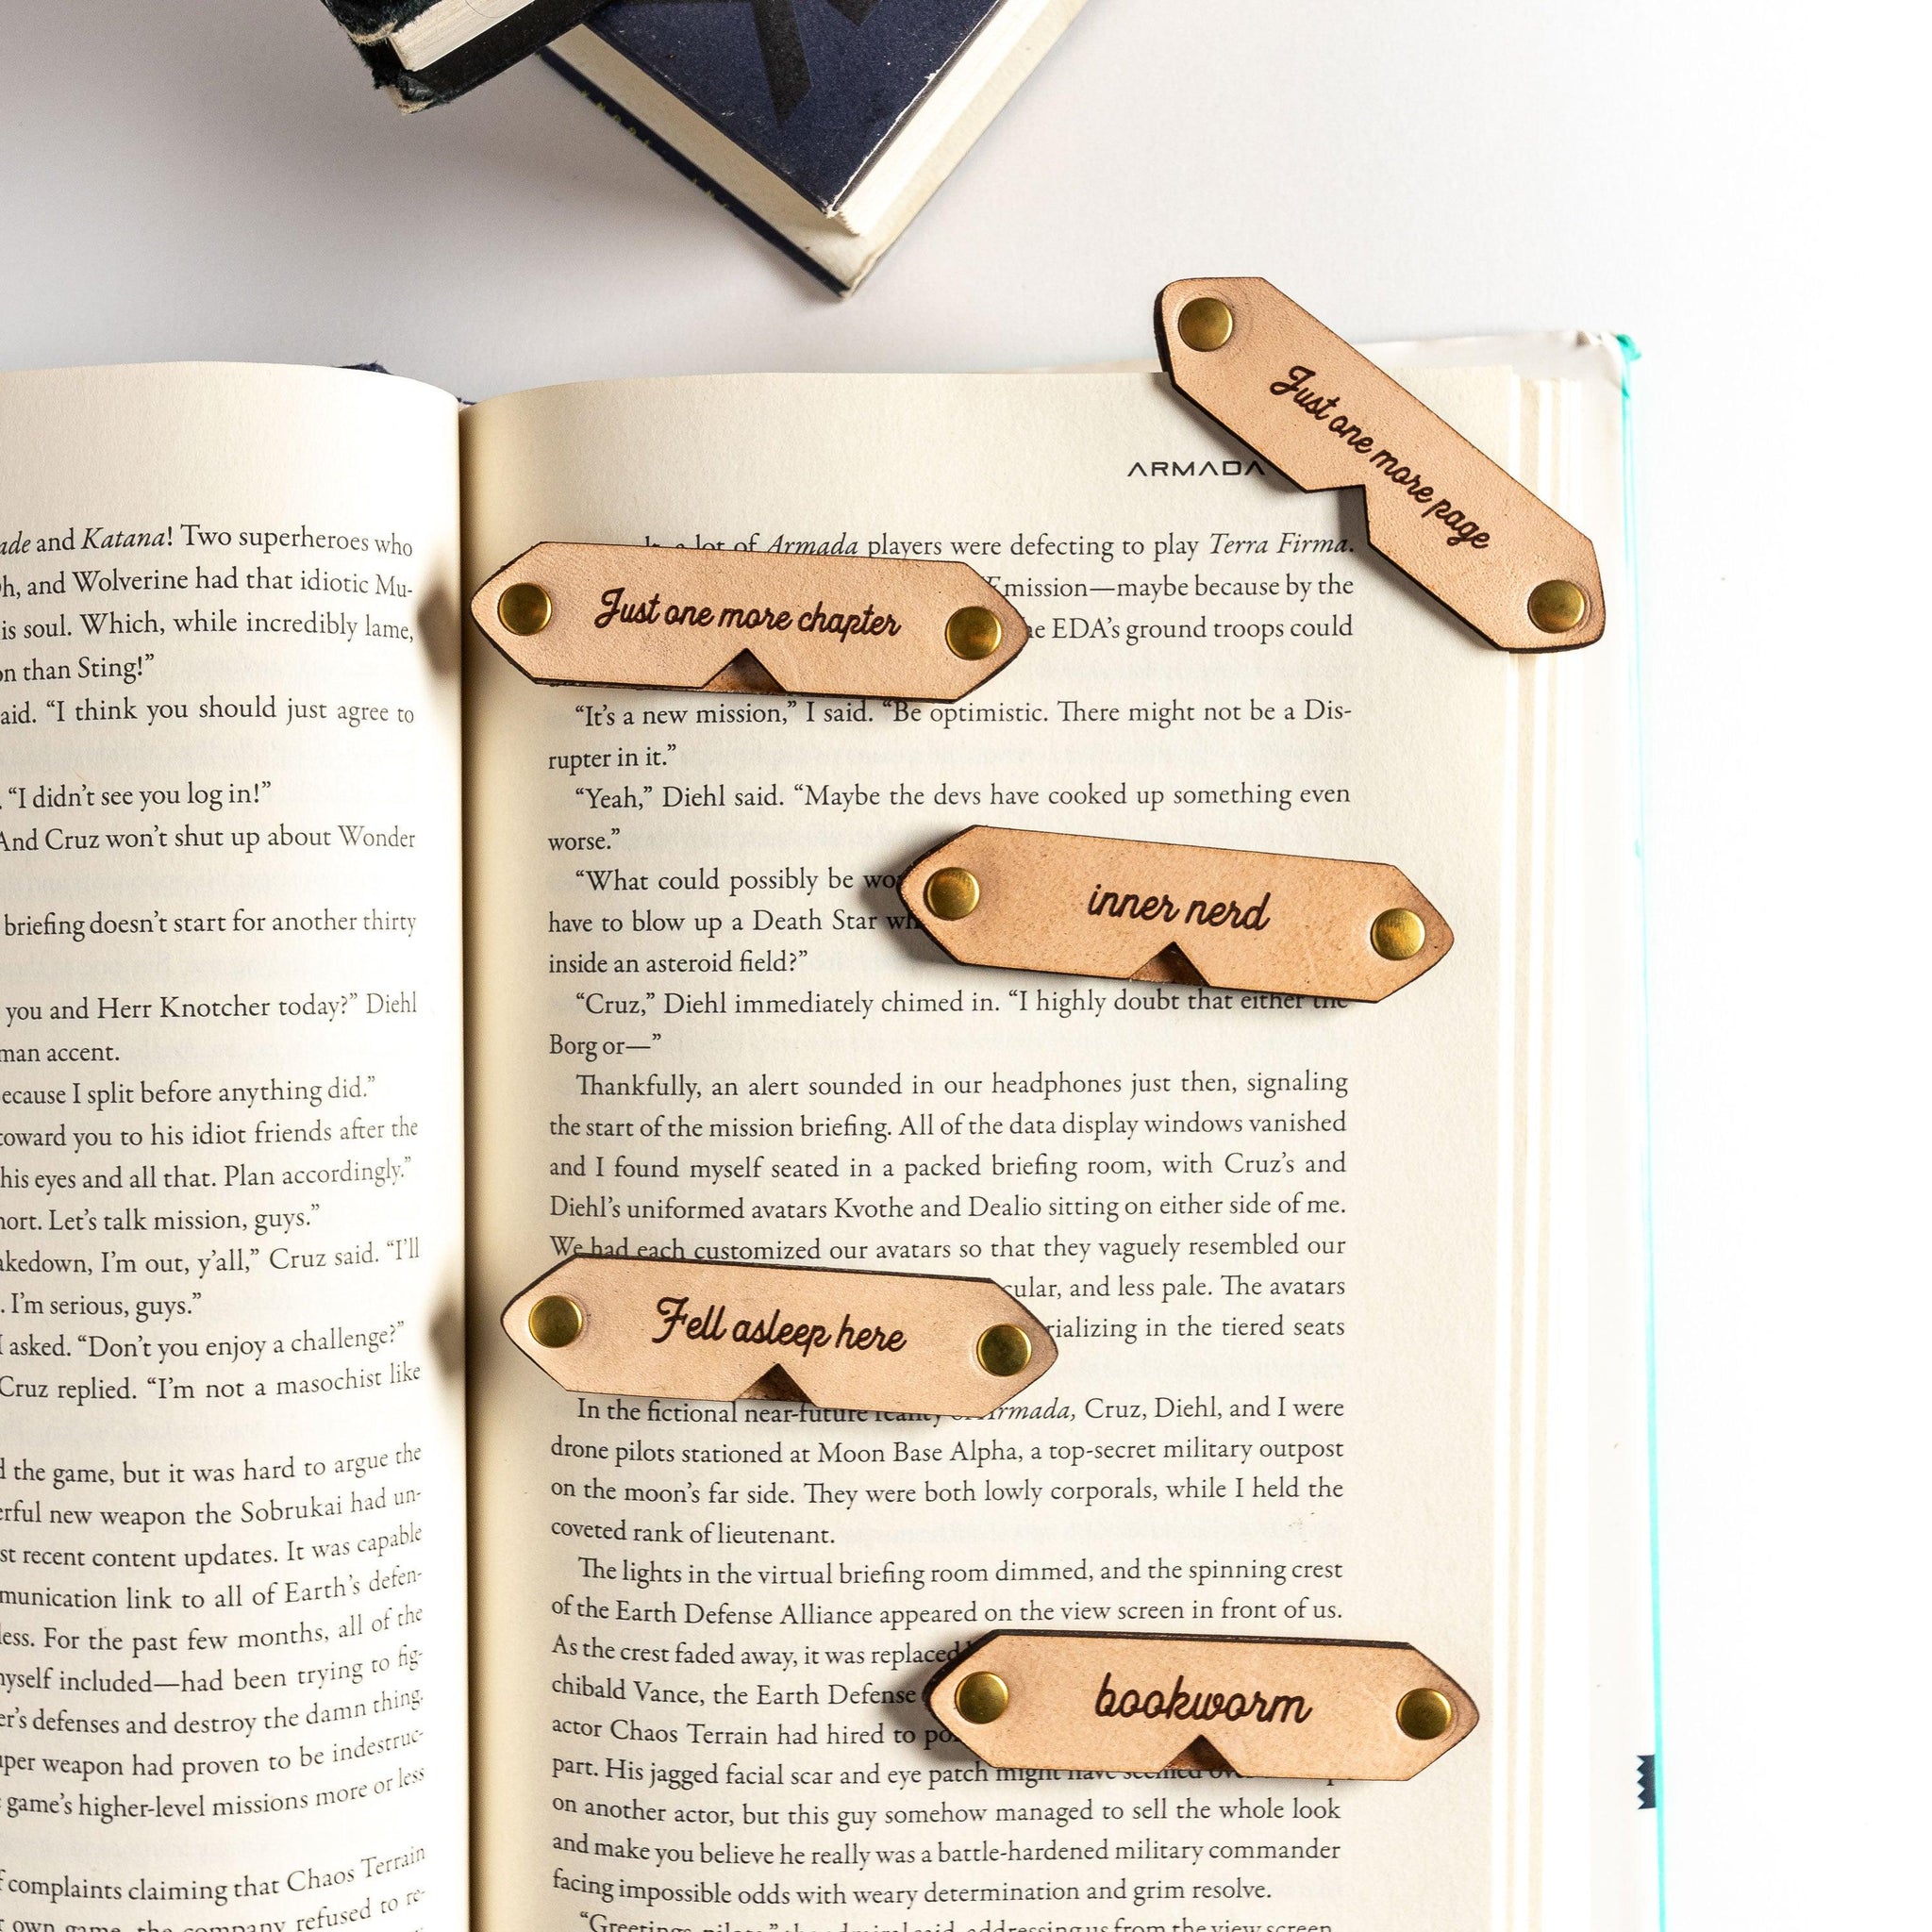 Corner Leather Bookmark - Espacio Handmade